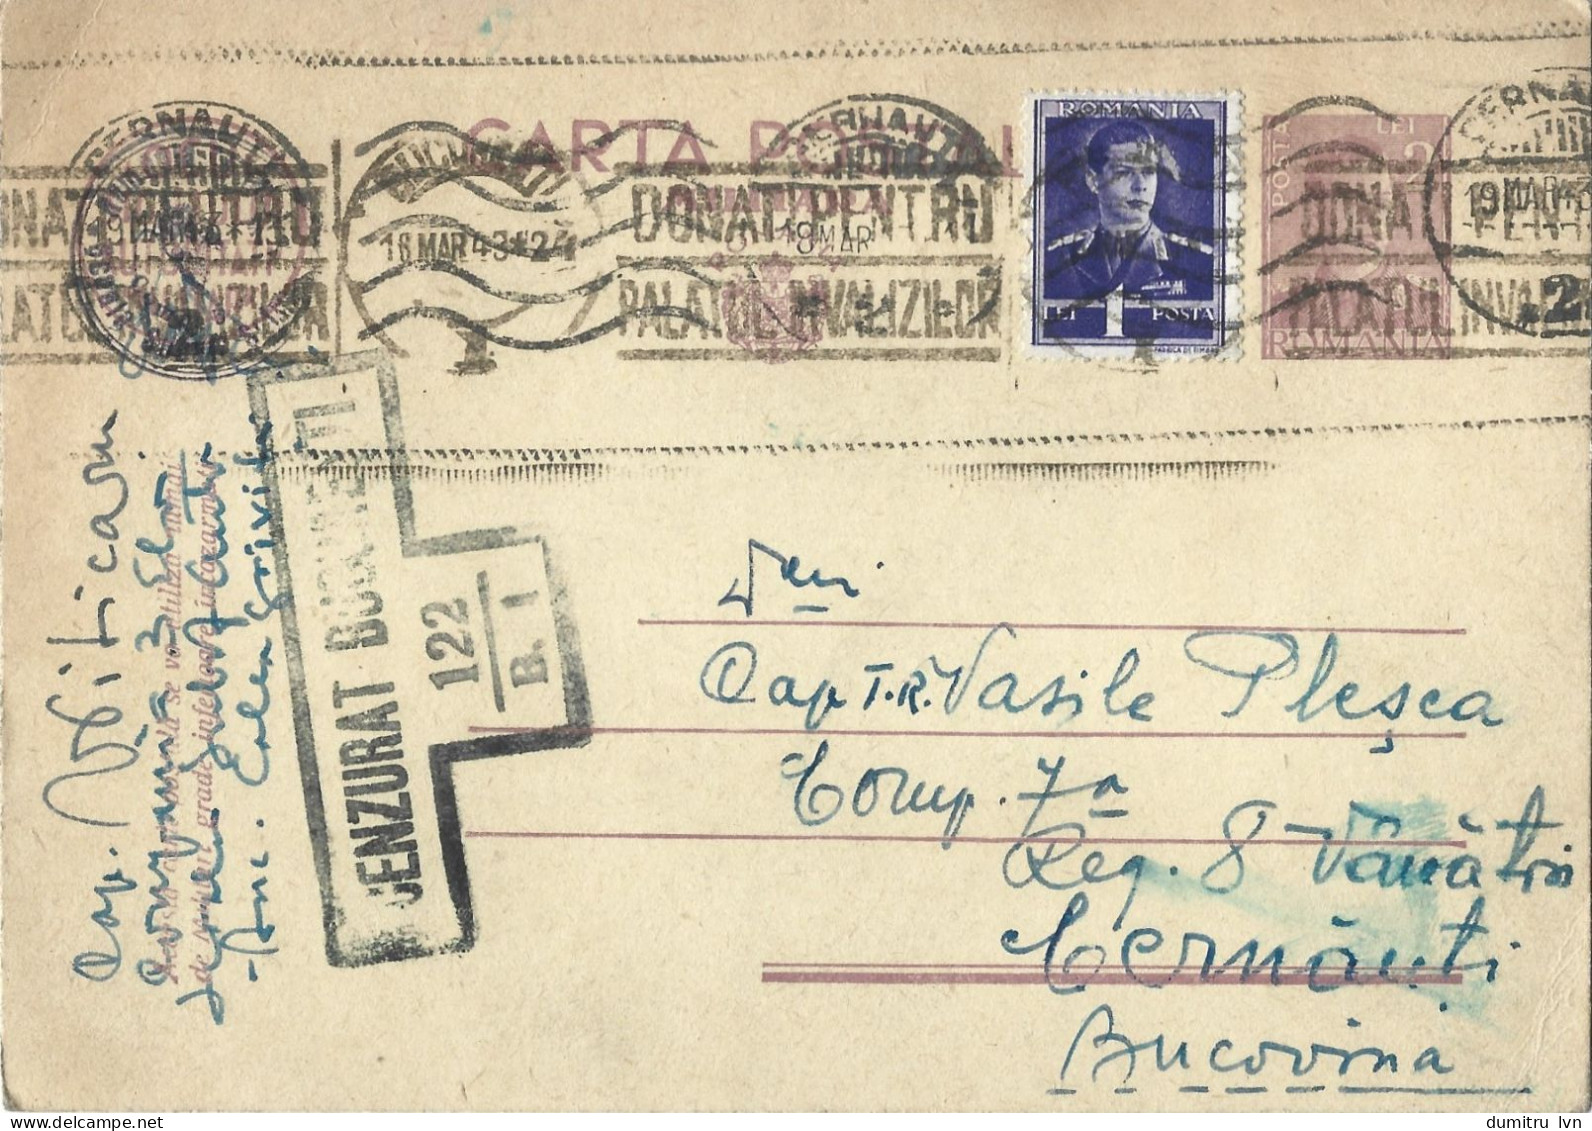 ROMANIA 1943 CERNAUTI, MILITARY POSTCARD, CENSORED, COMMUNIST PROPAGANDA STAMP POSTCARD STATIONERY - World War 2 Letters